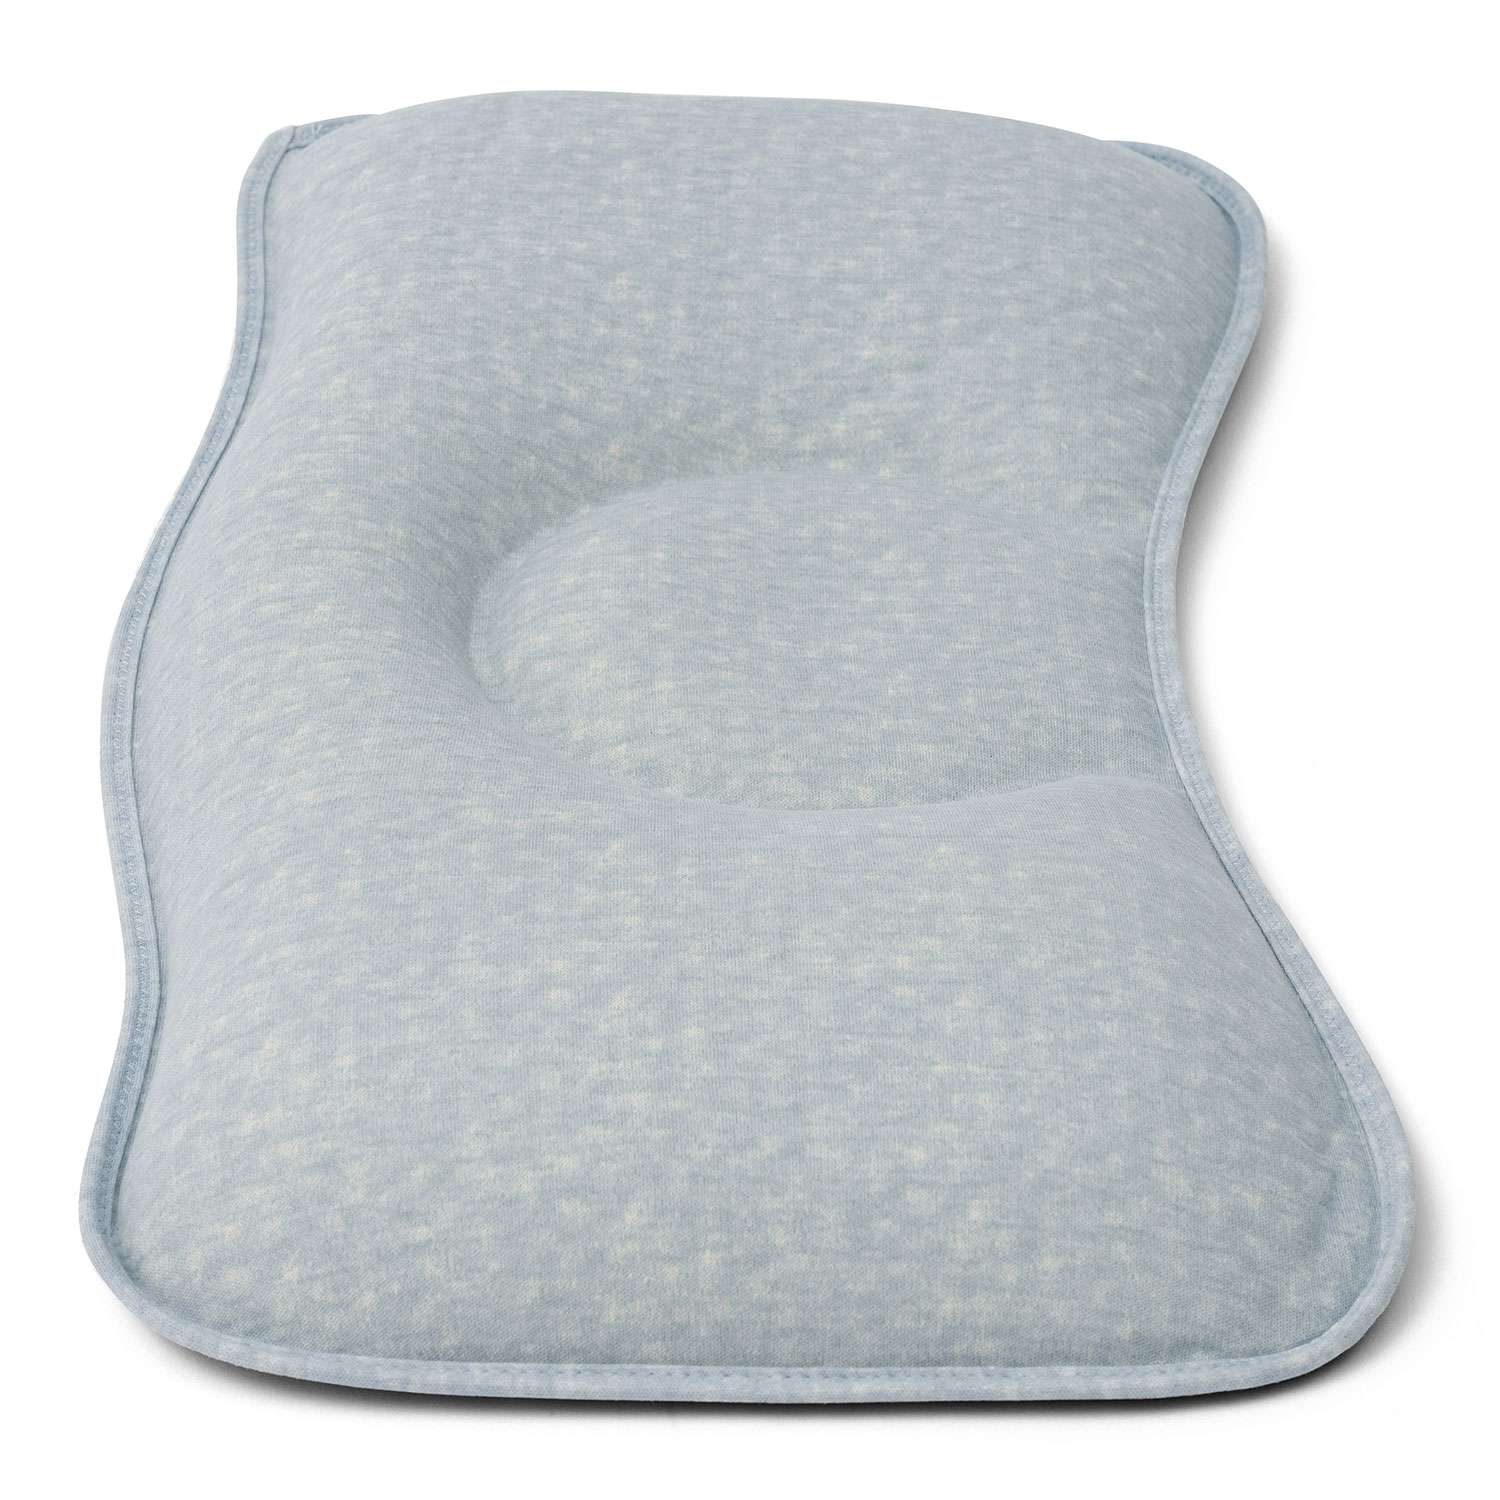 Подушка для новорожденного Nuovita Neonutti Isolotto Dipinto Синяя - фото 2